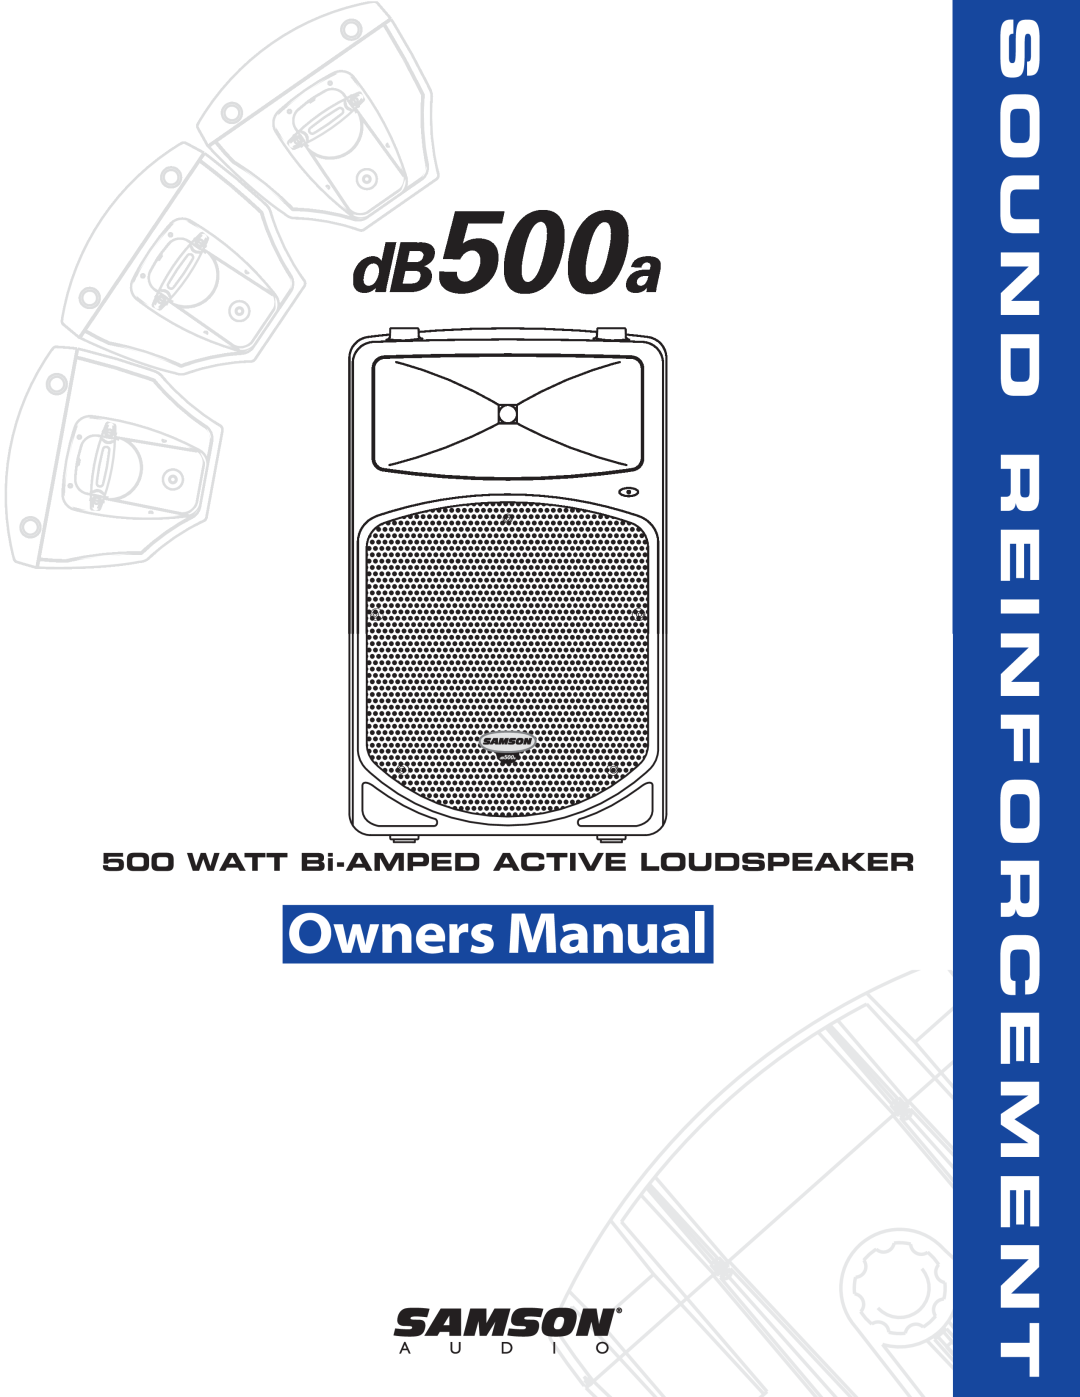 Samson dB500a manual WATT Bi-AMPED ACTIVE LOUDSPEAKER, Sound Reinforcement, A U D I O 